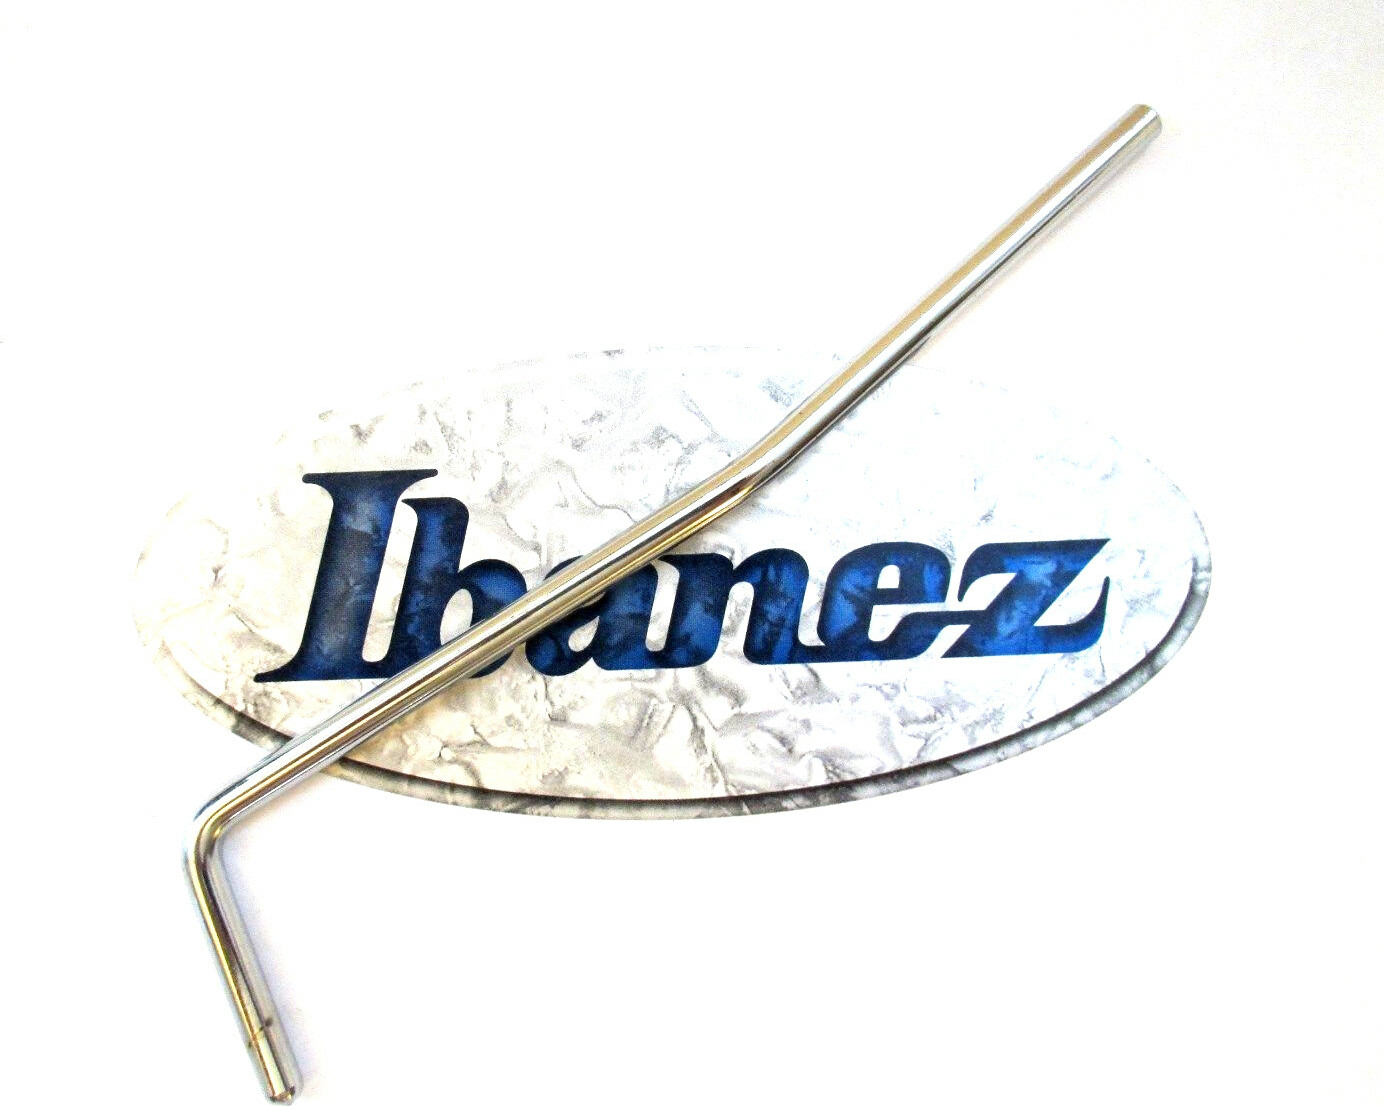 Ibanez 2sa2-1c - Vibrato arm - Main picture